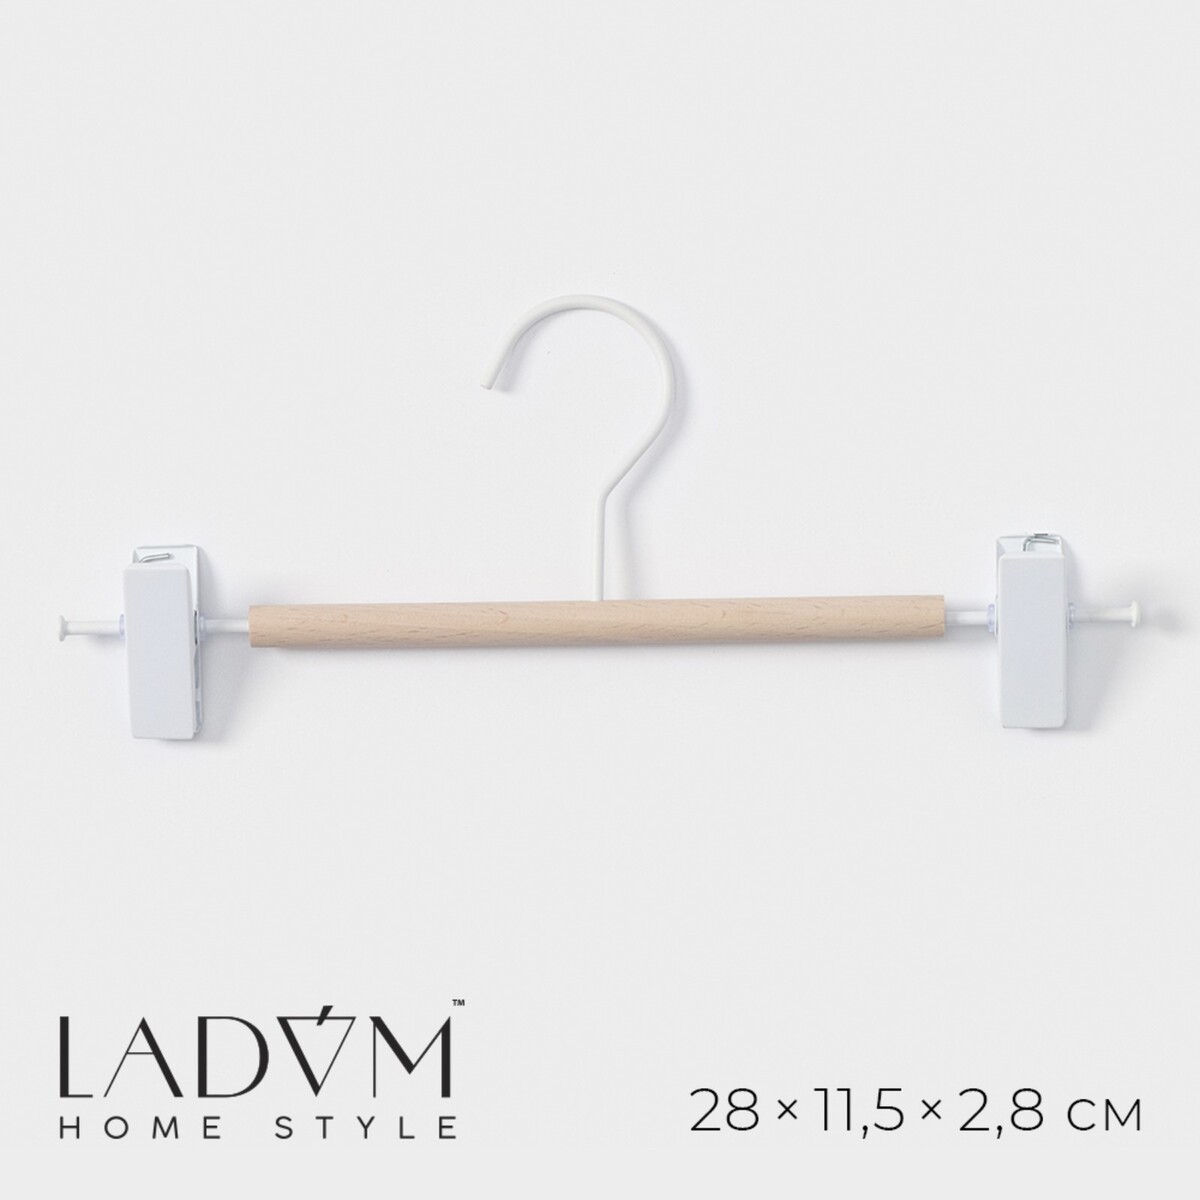 Вешалка для брюк и юбок ladо́m laconique, 28×11,5×2,8 см, цвет белый